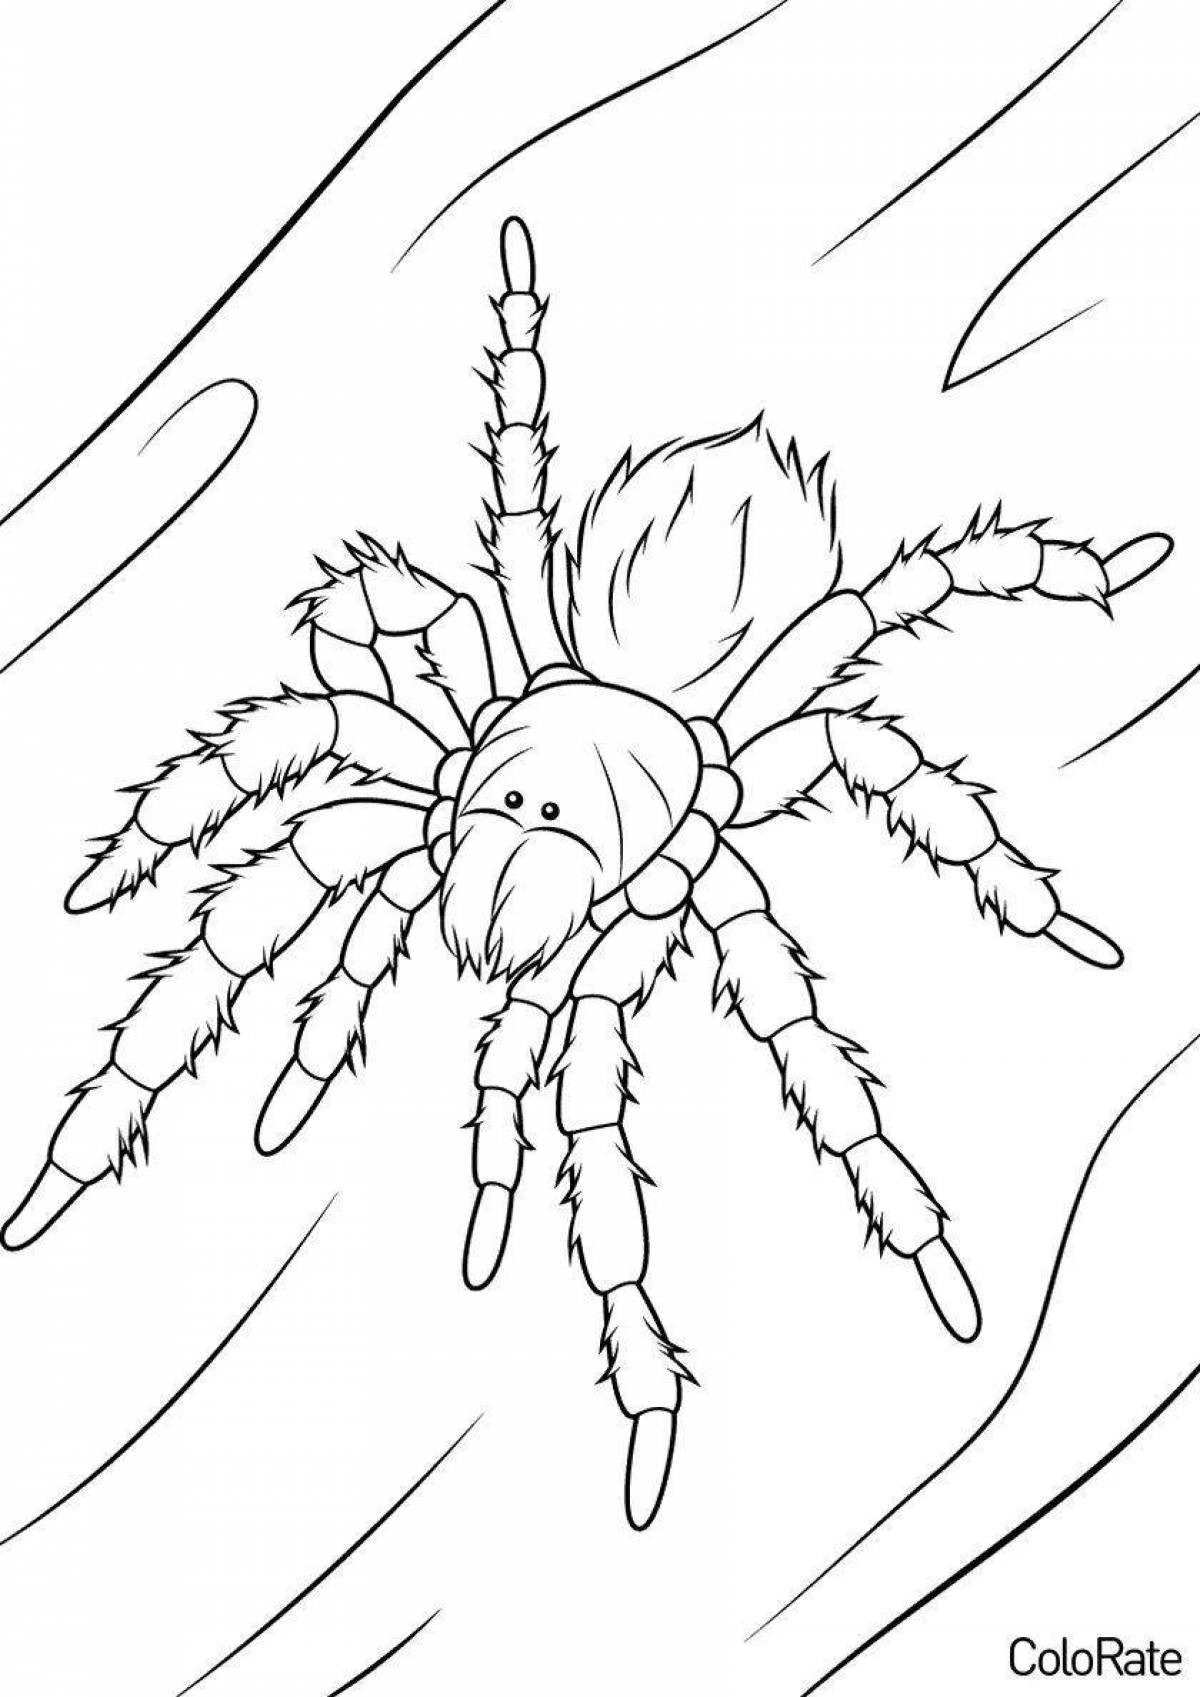 Delightful spider tarantula coloring book